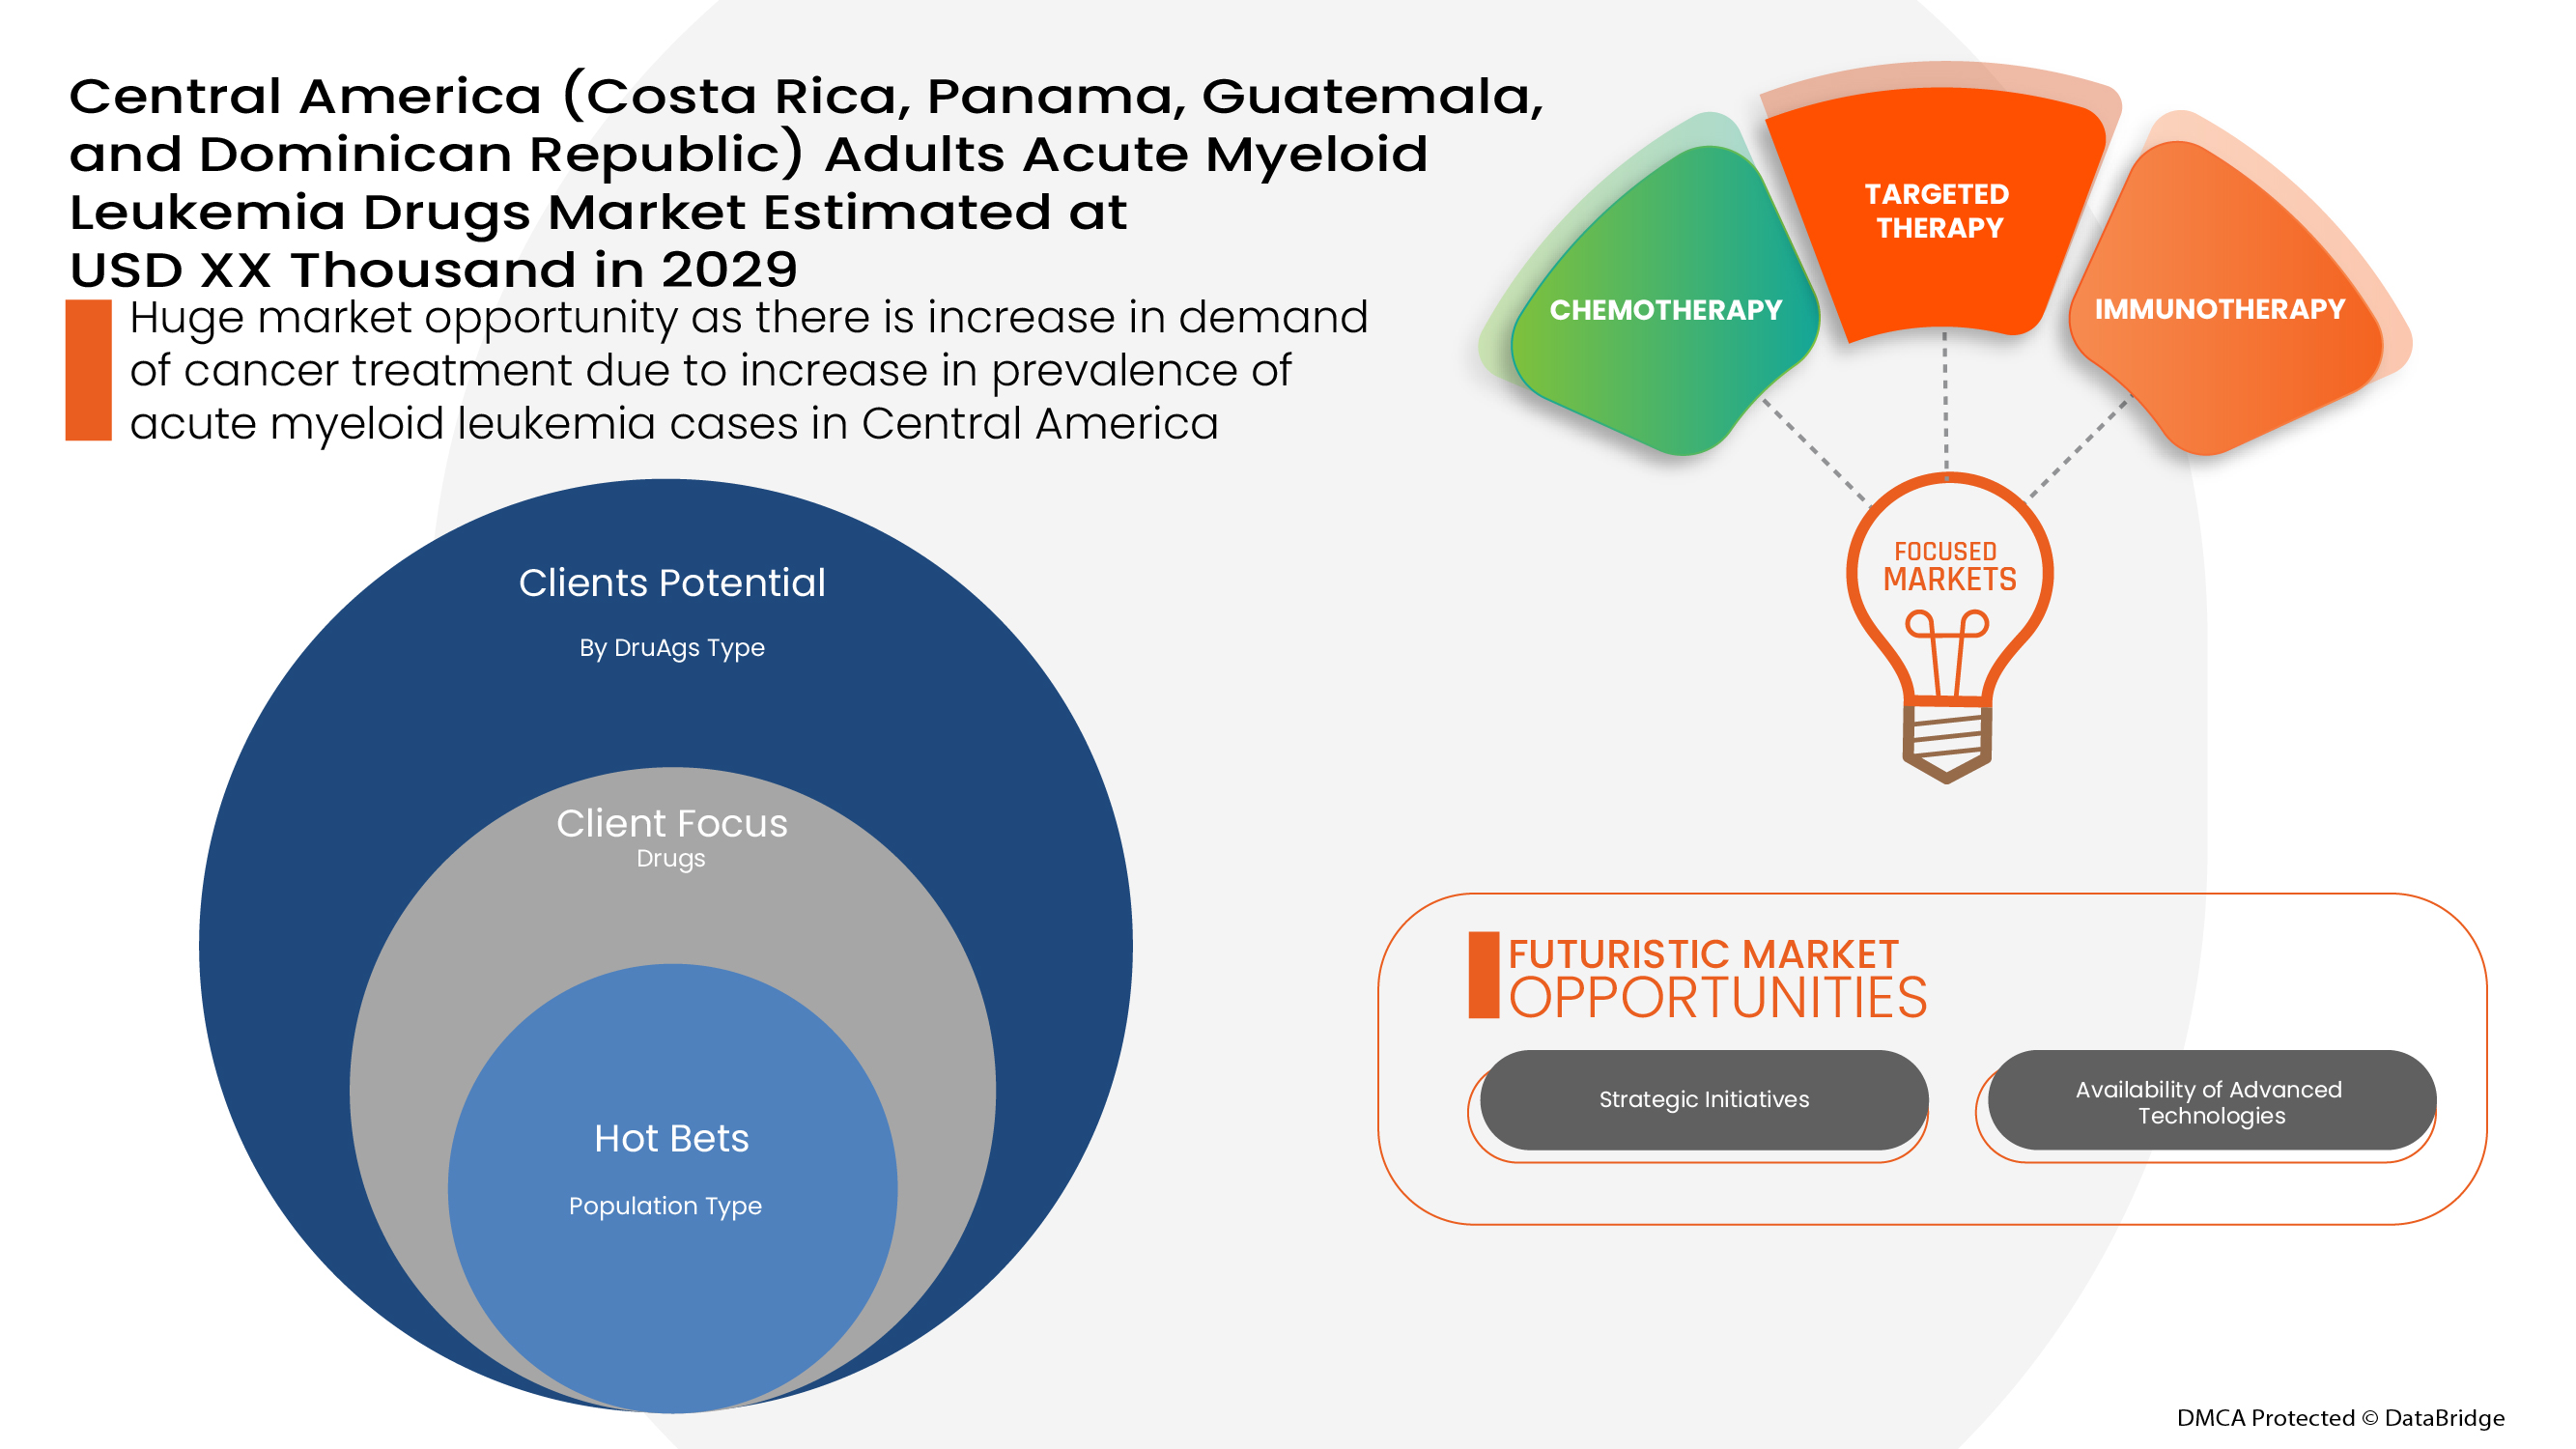 Central America (Costa Rica, Panama, Guatemala and Dominican Republic) Acute Myeloid Leukemia Market